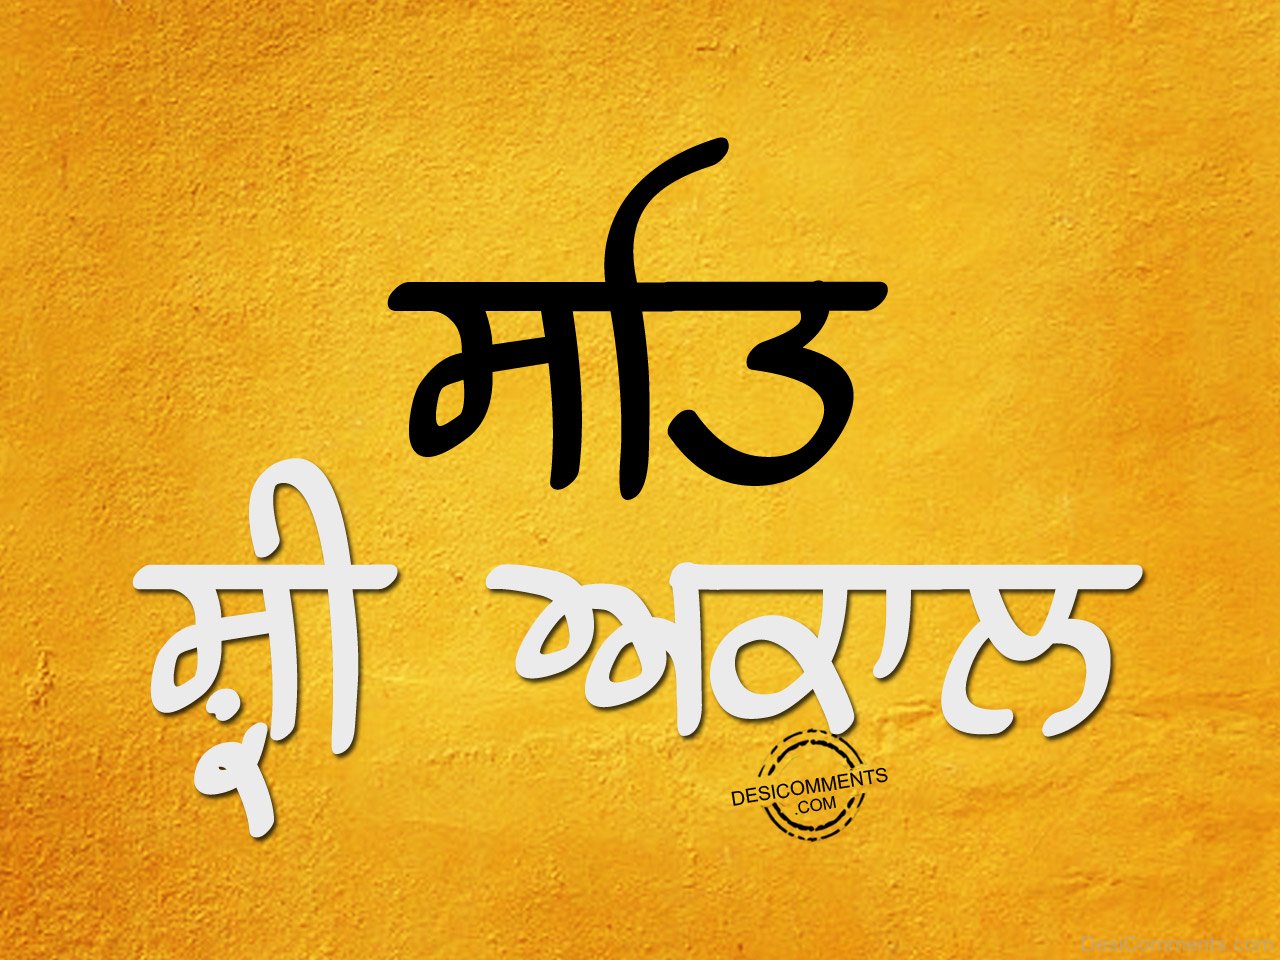 Sat Sri akal on yellow background - DesiComments.com